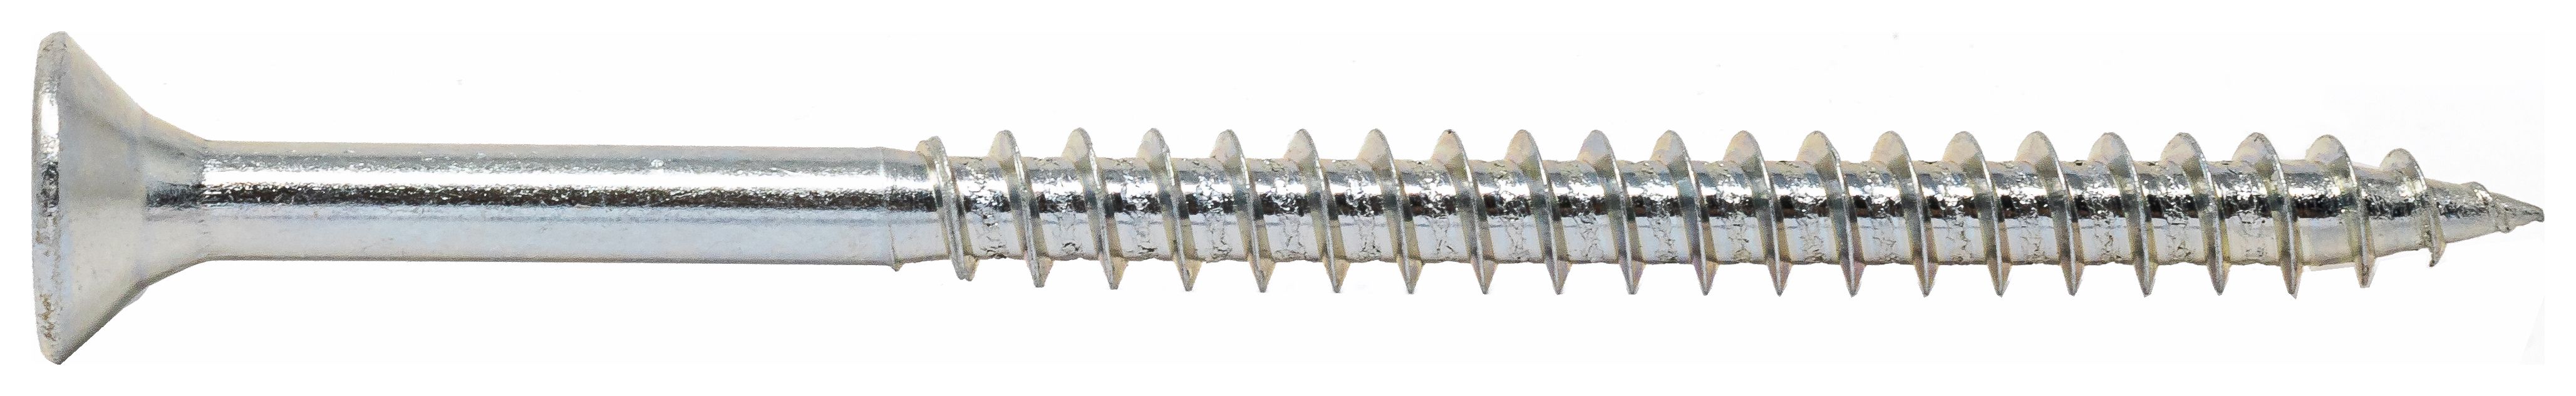 Wickes Single Thread Zinc Plated Screw - 3 X 25mm Pack Of 200